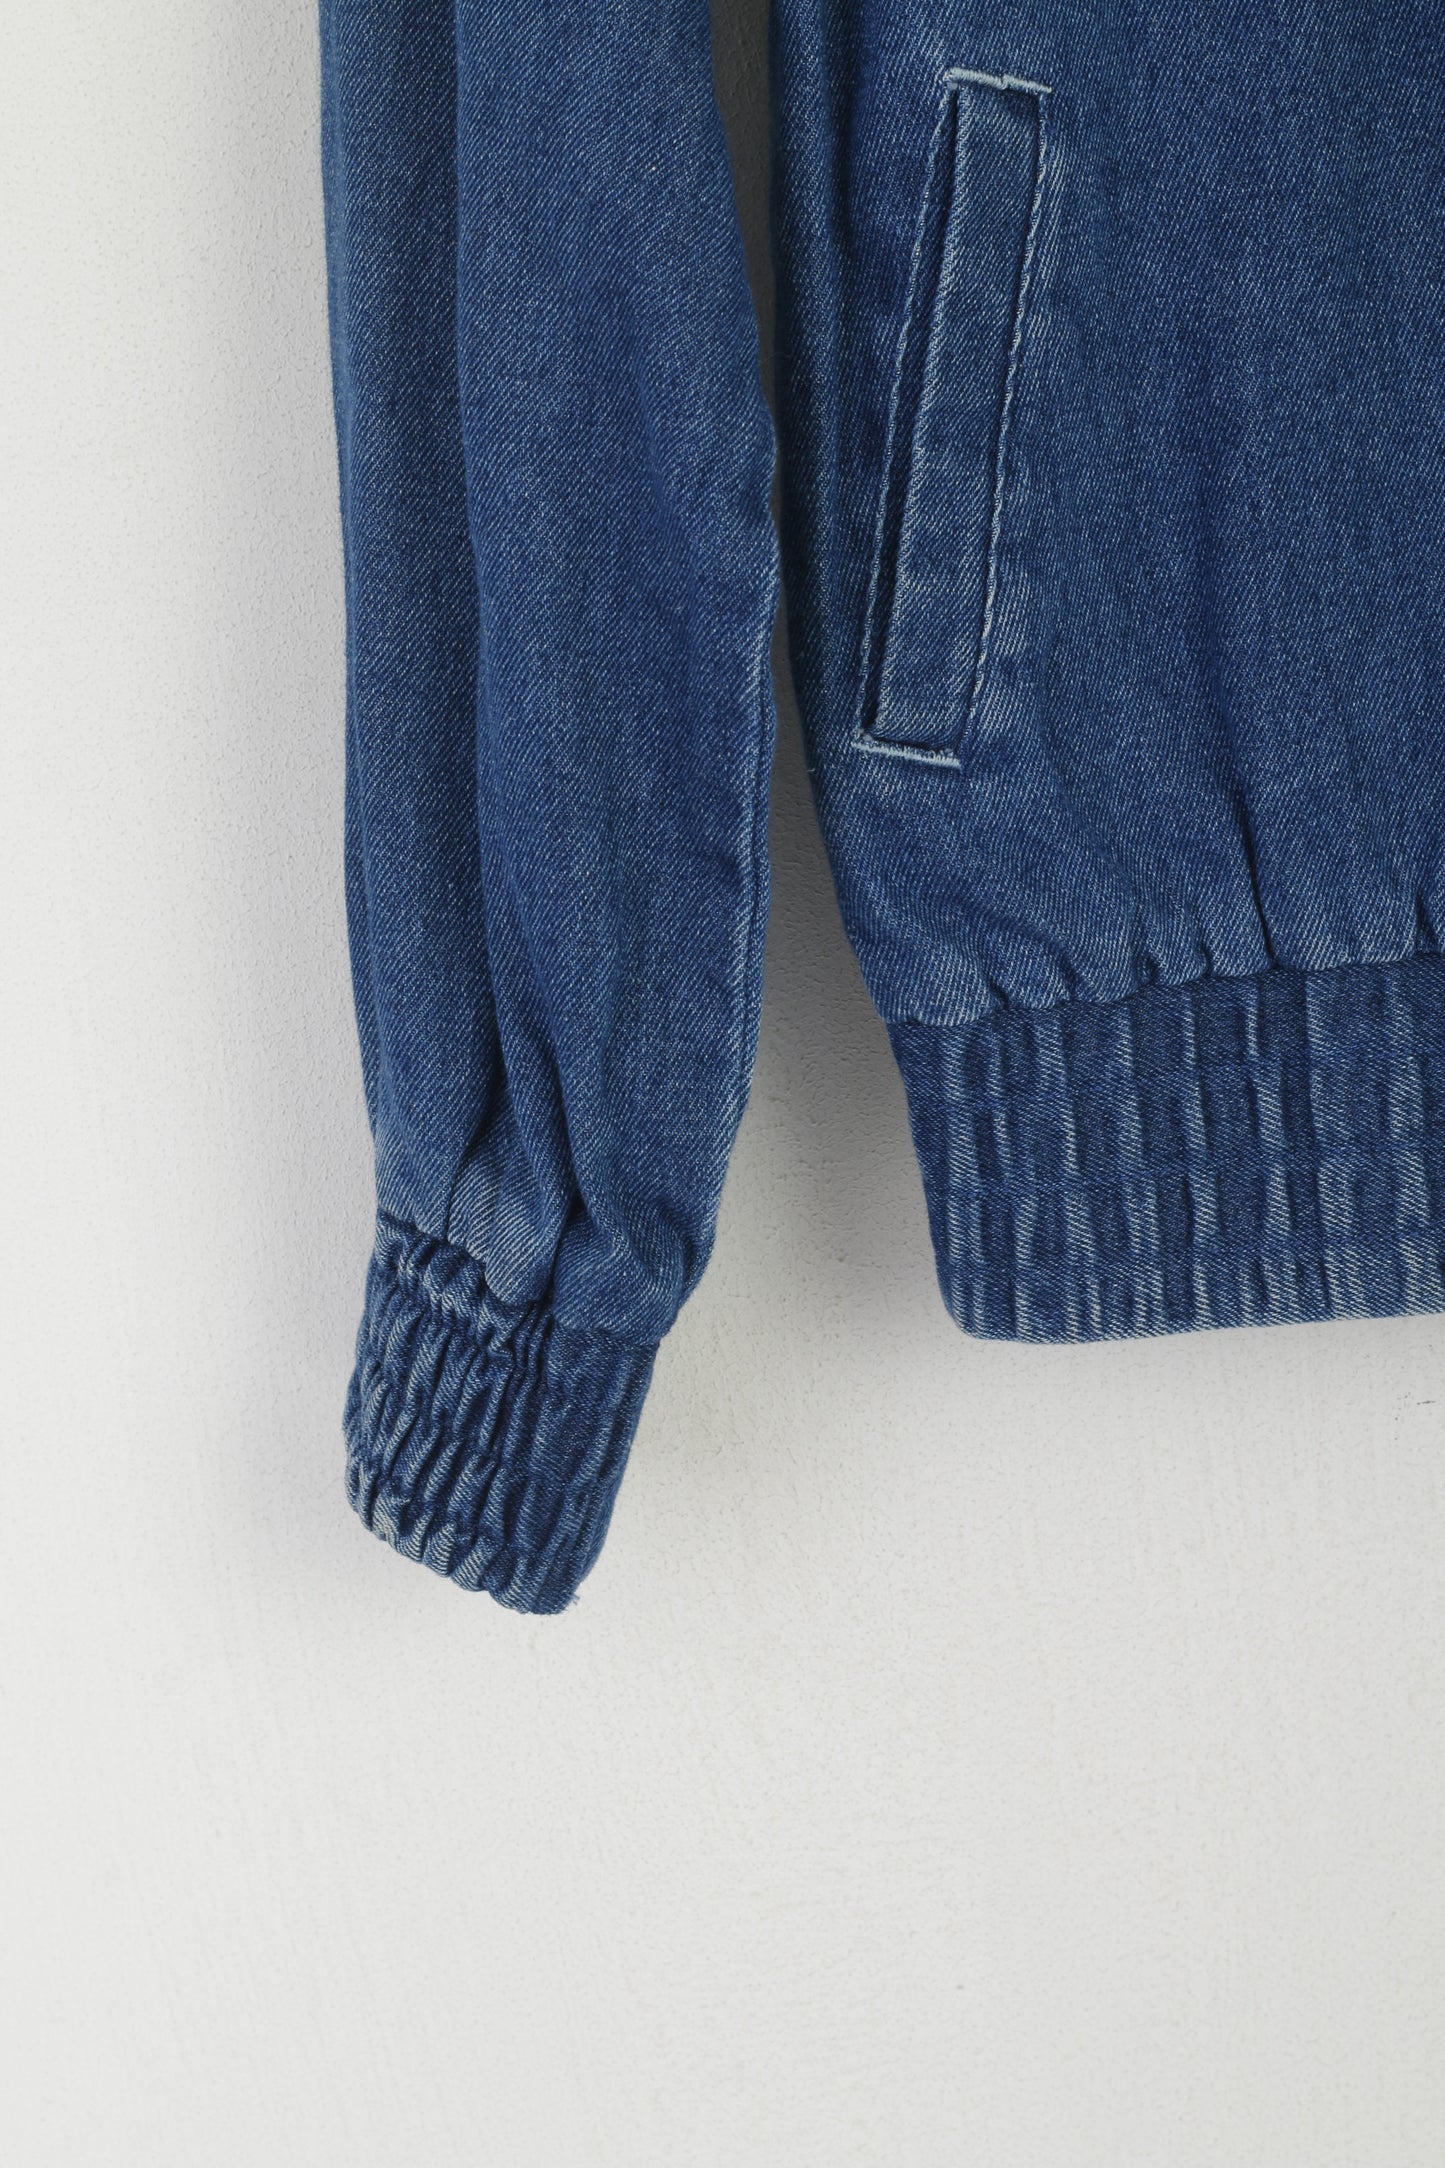 Nuova giacca di jeans Ellesse Grils JM 140-146 Top in cotone blu con cerniera intera